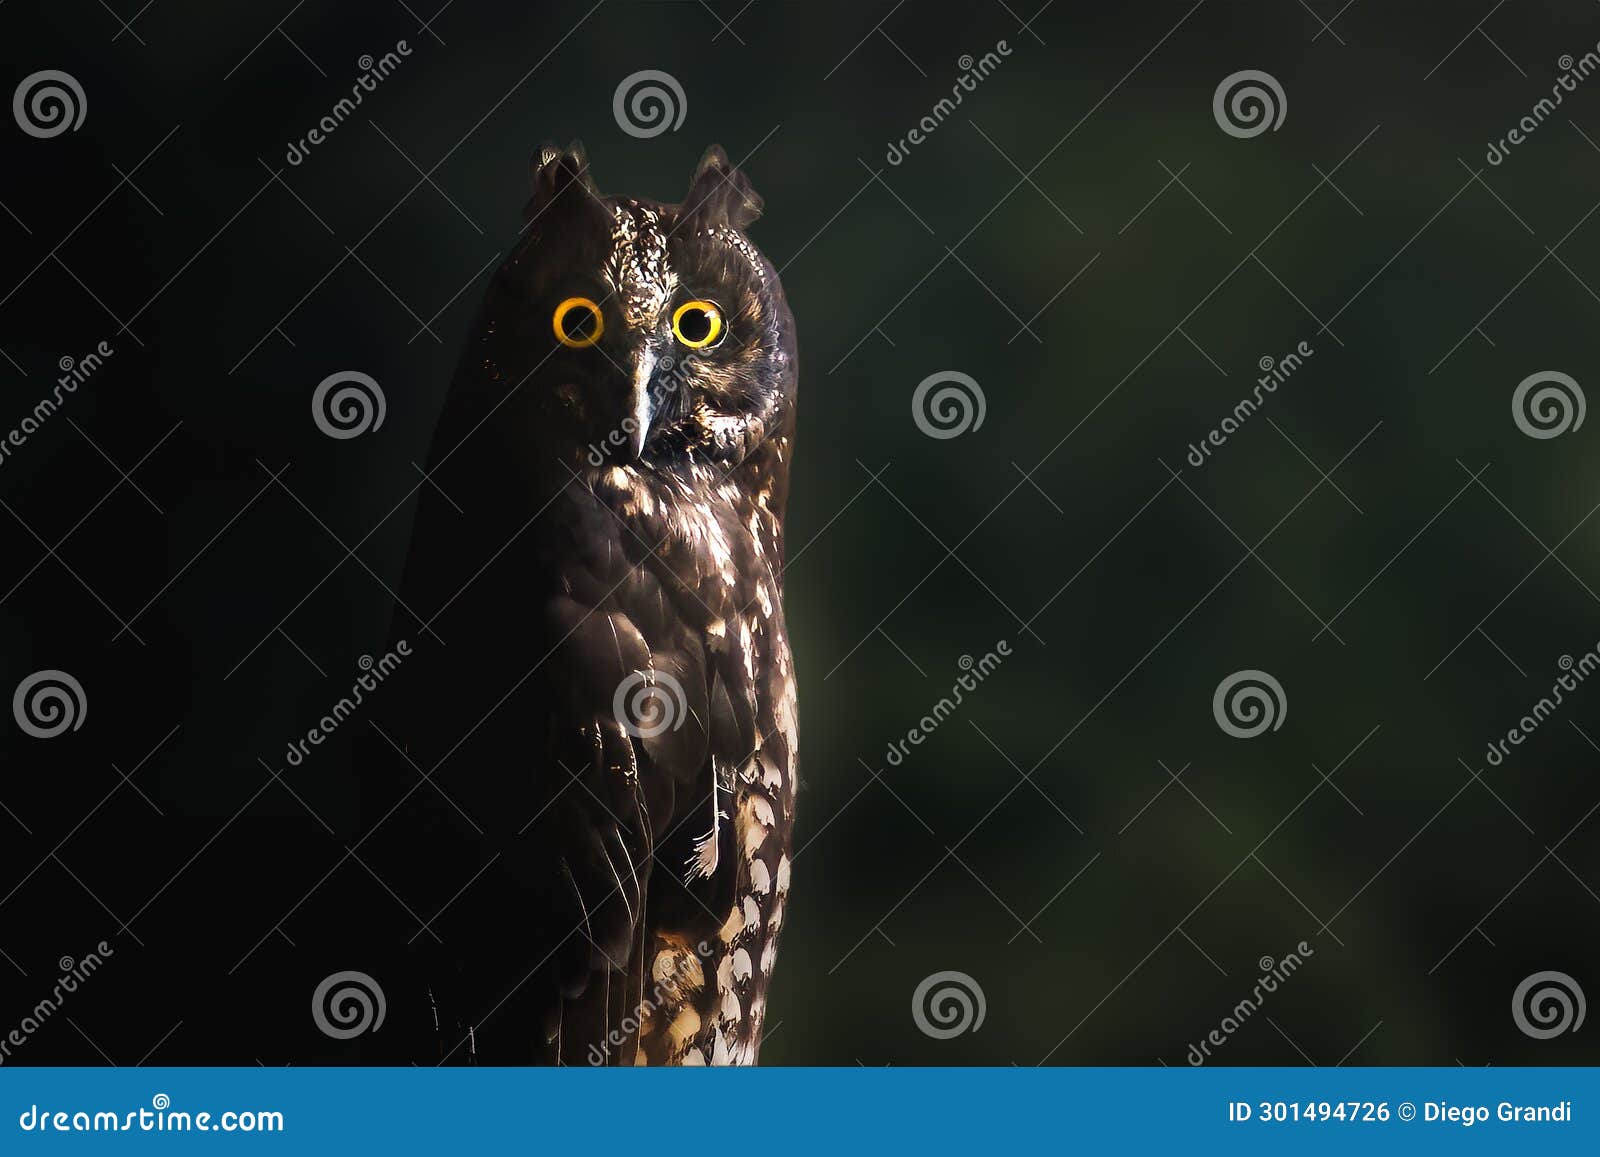 stygian owl - nocturnal bird